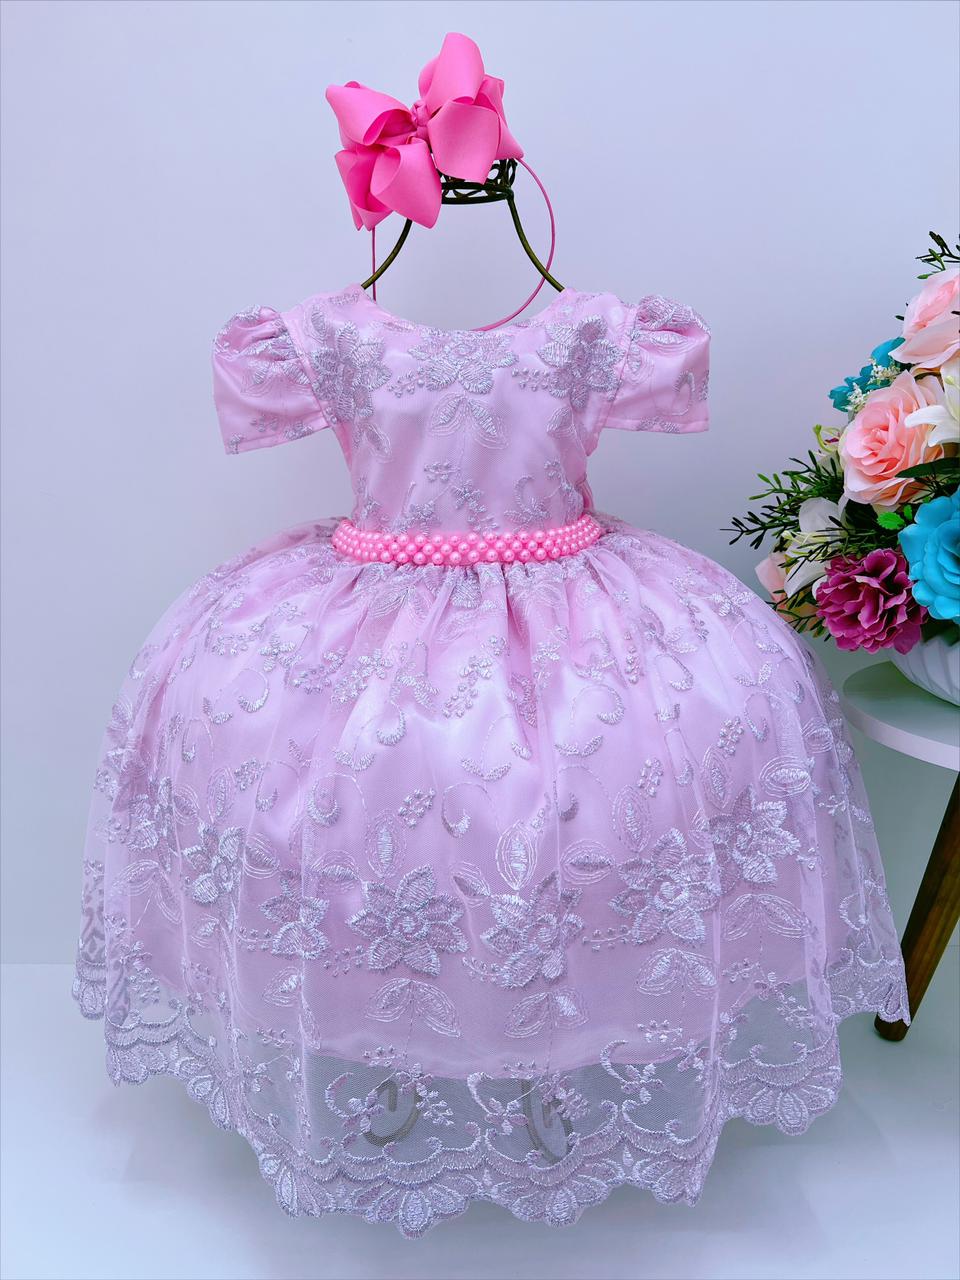 Vestido Infantil Rosa Realeza C/ Renda Luxo Cinto de Pérolas